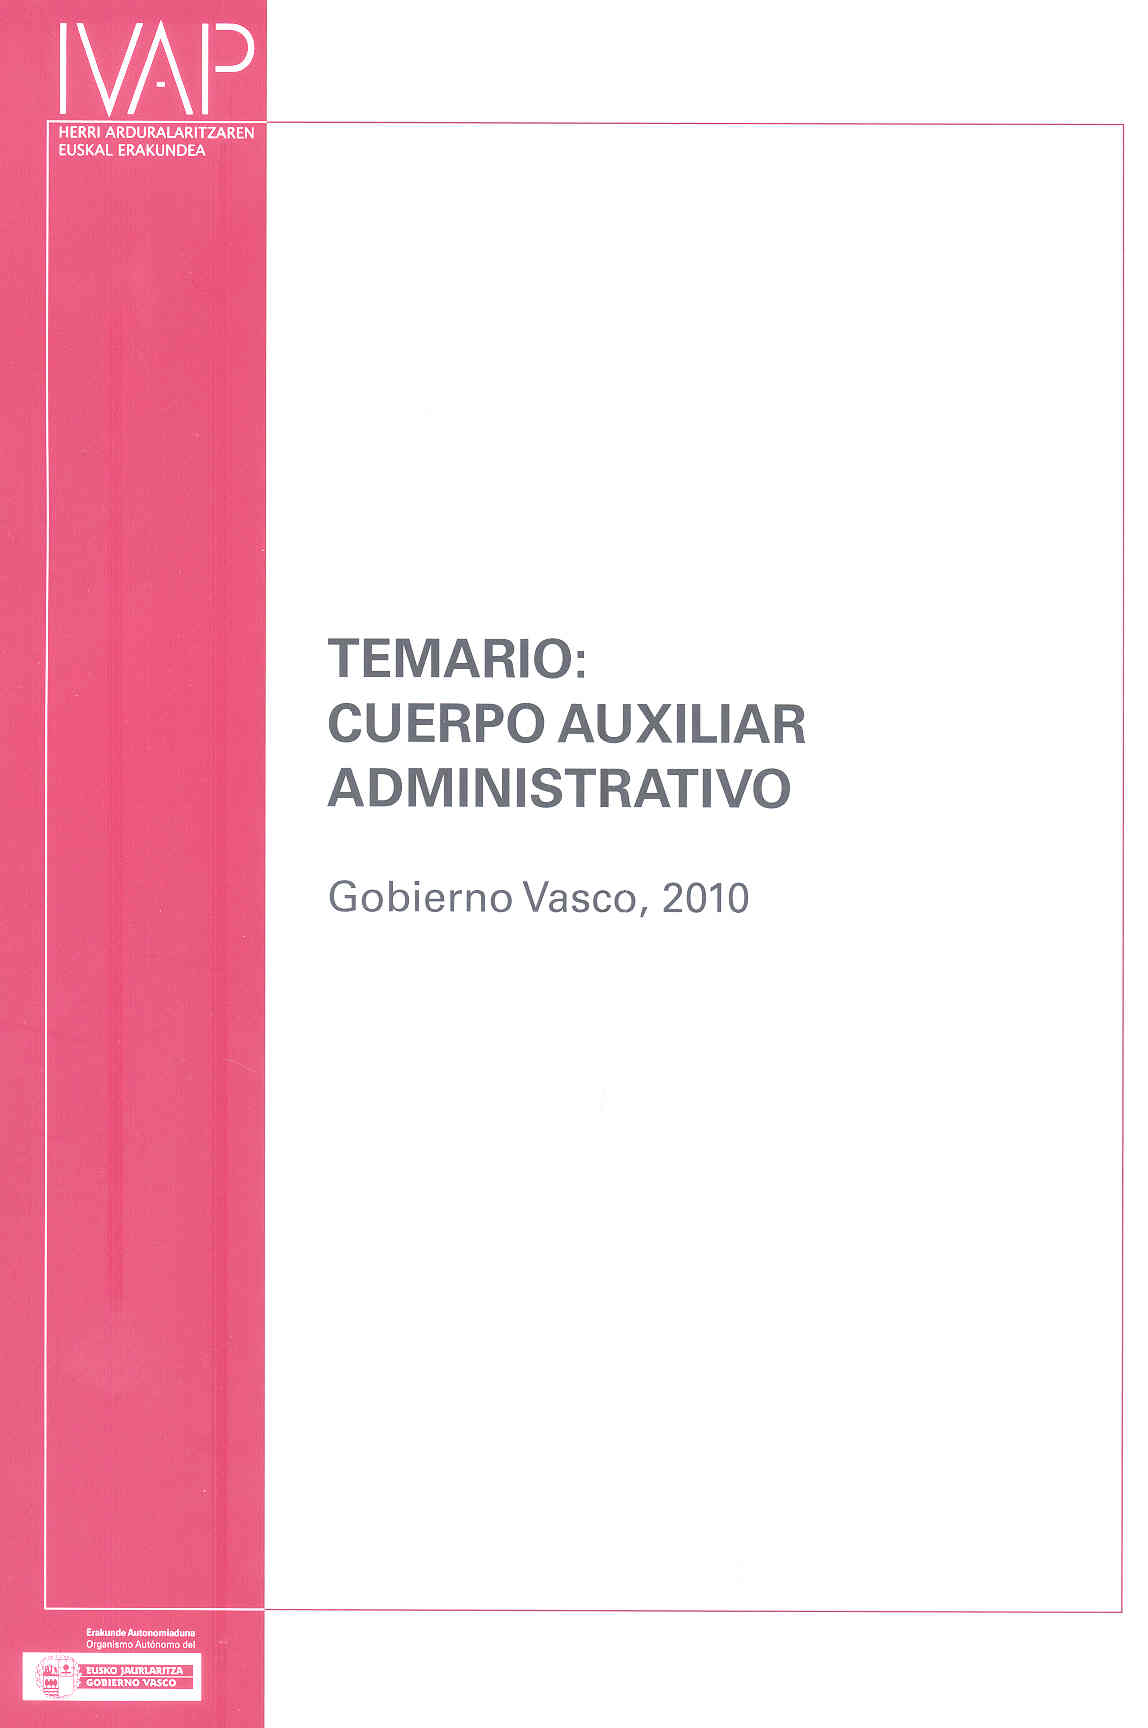 Temario: Cuerpo Auxiliar Administrativo